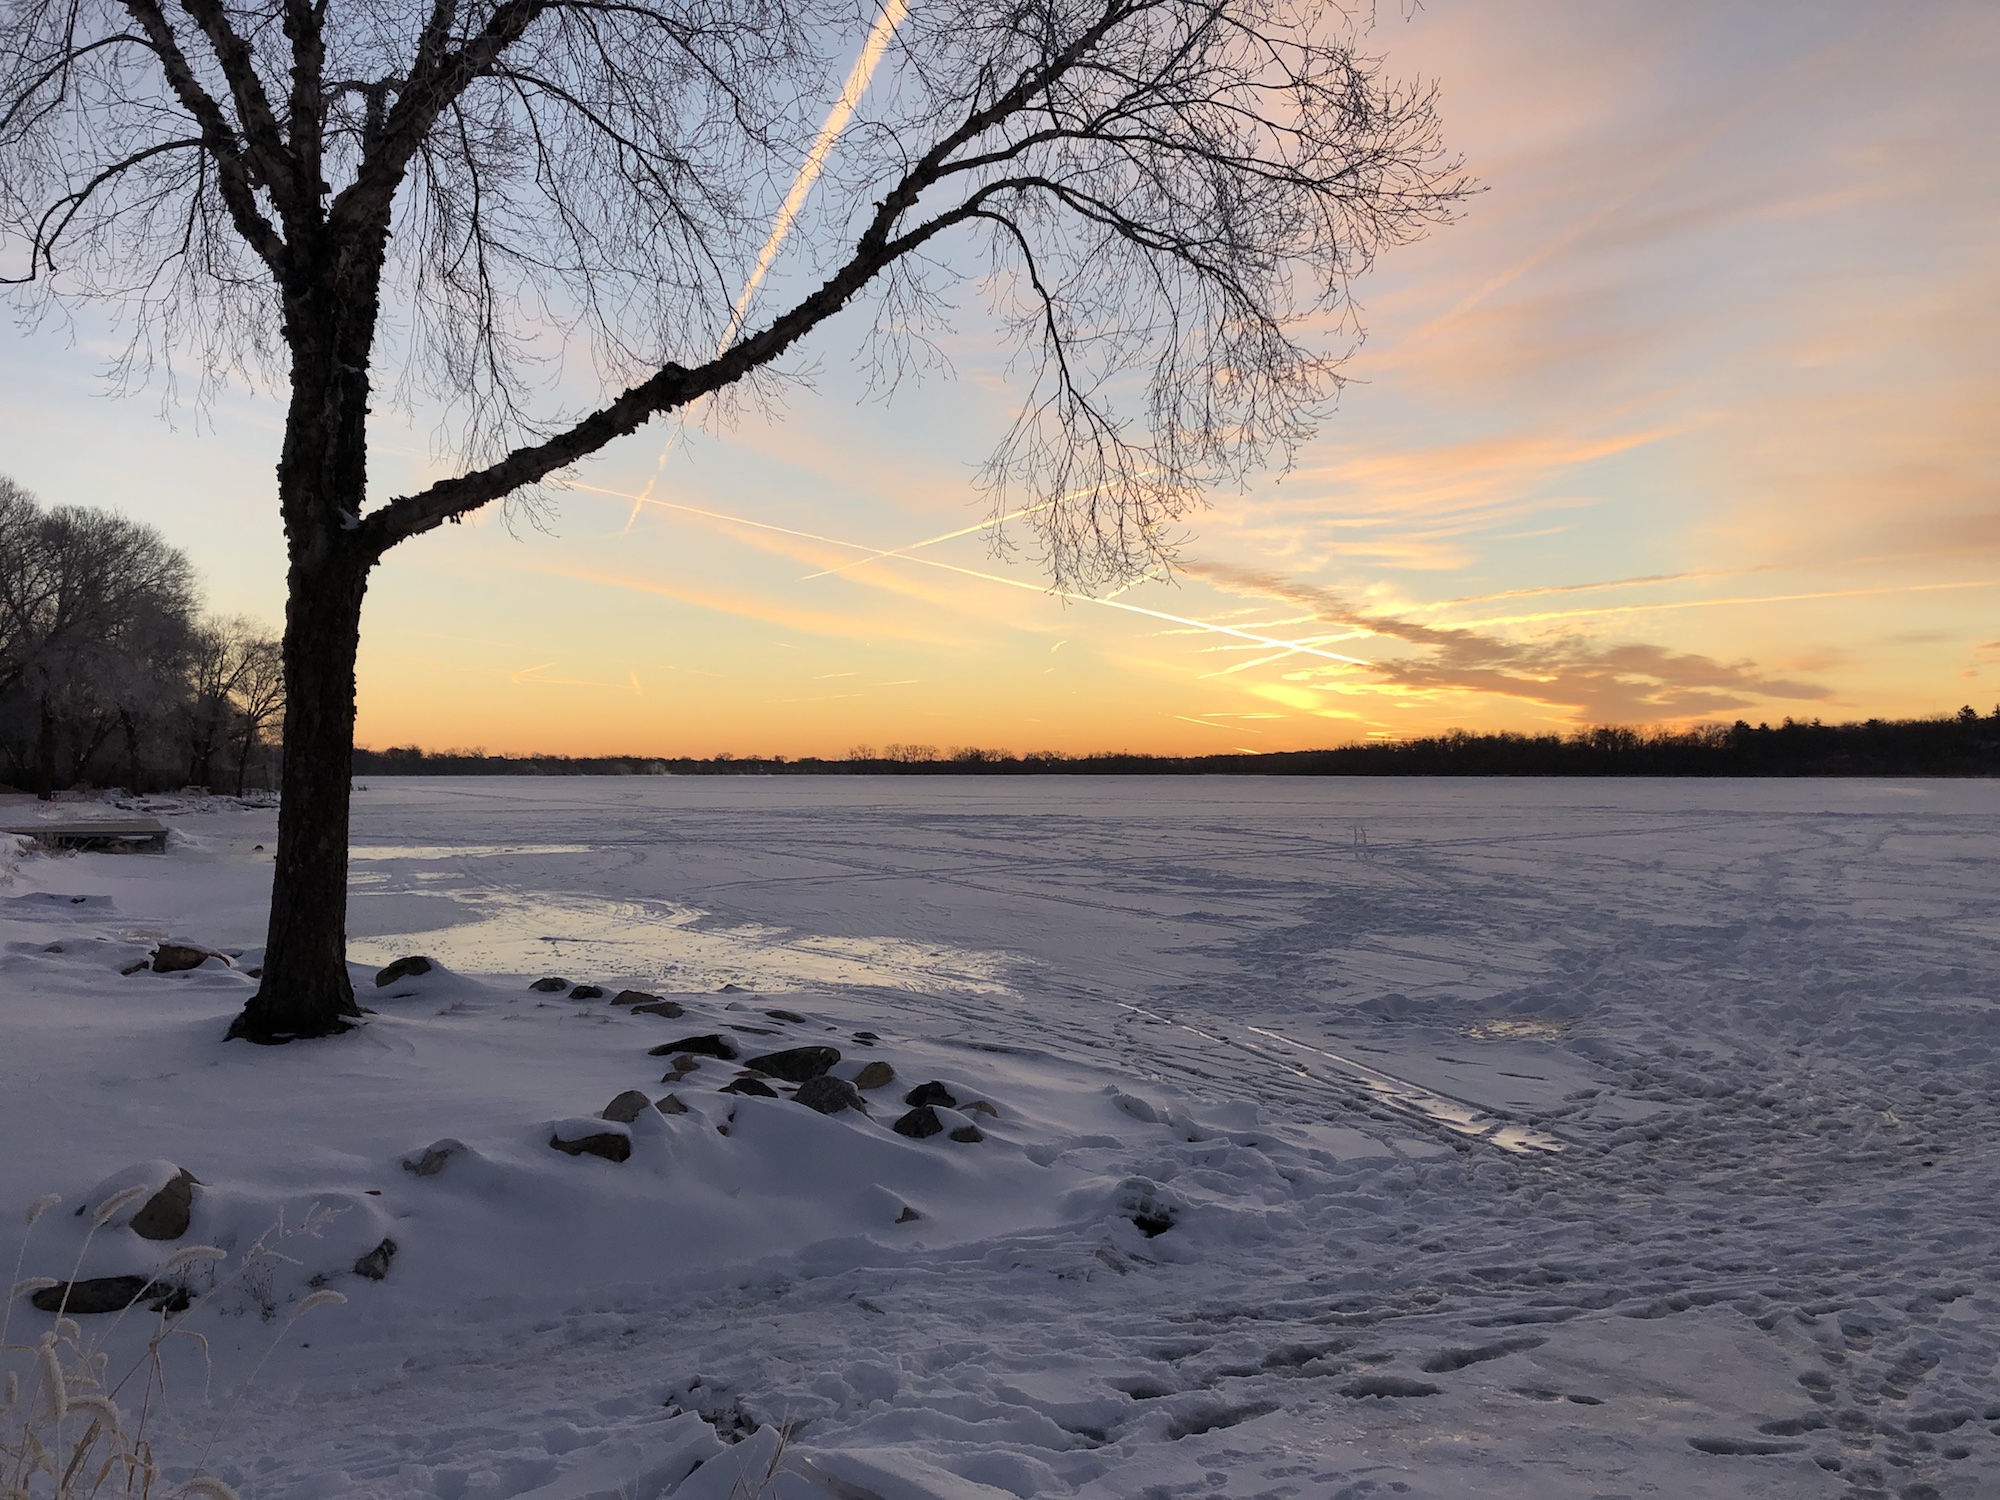 Lake Wingra on January 21, 2019.